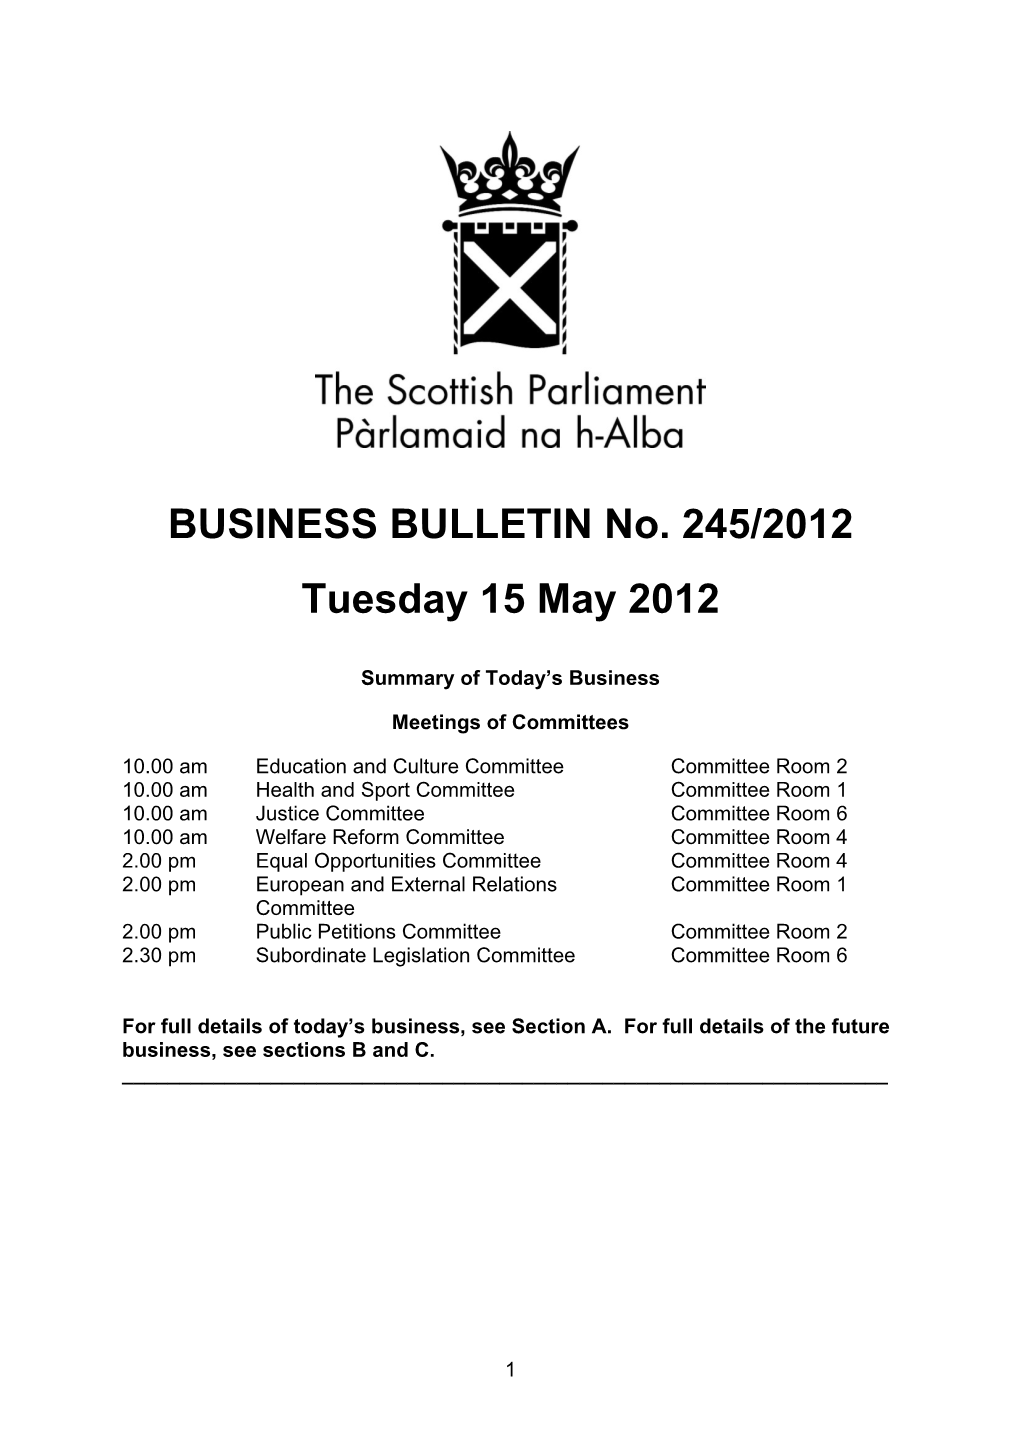 BUSINESS BULLETIN No. 245/2012 Tuesday 15 May 2012